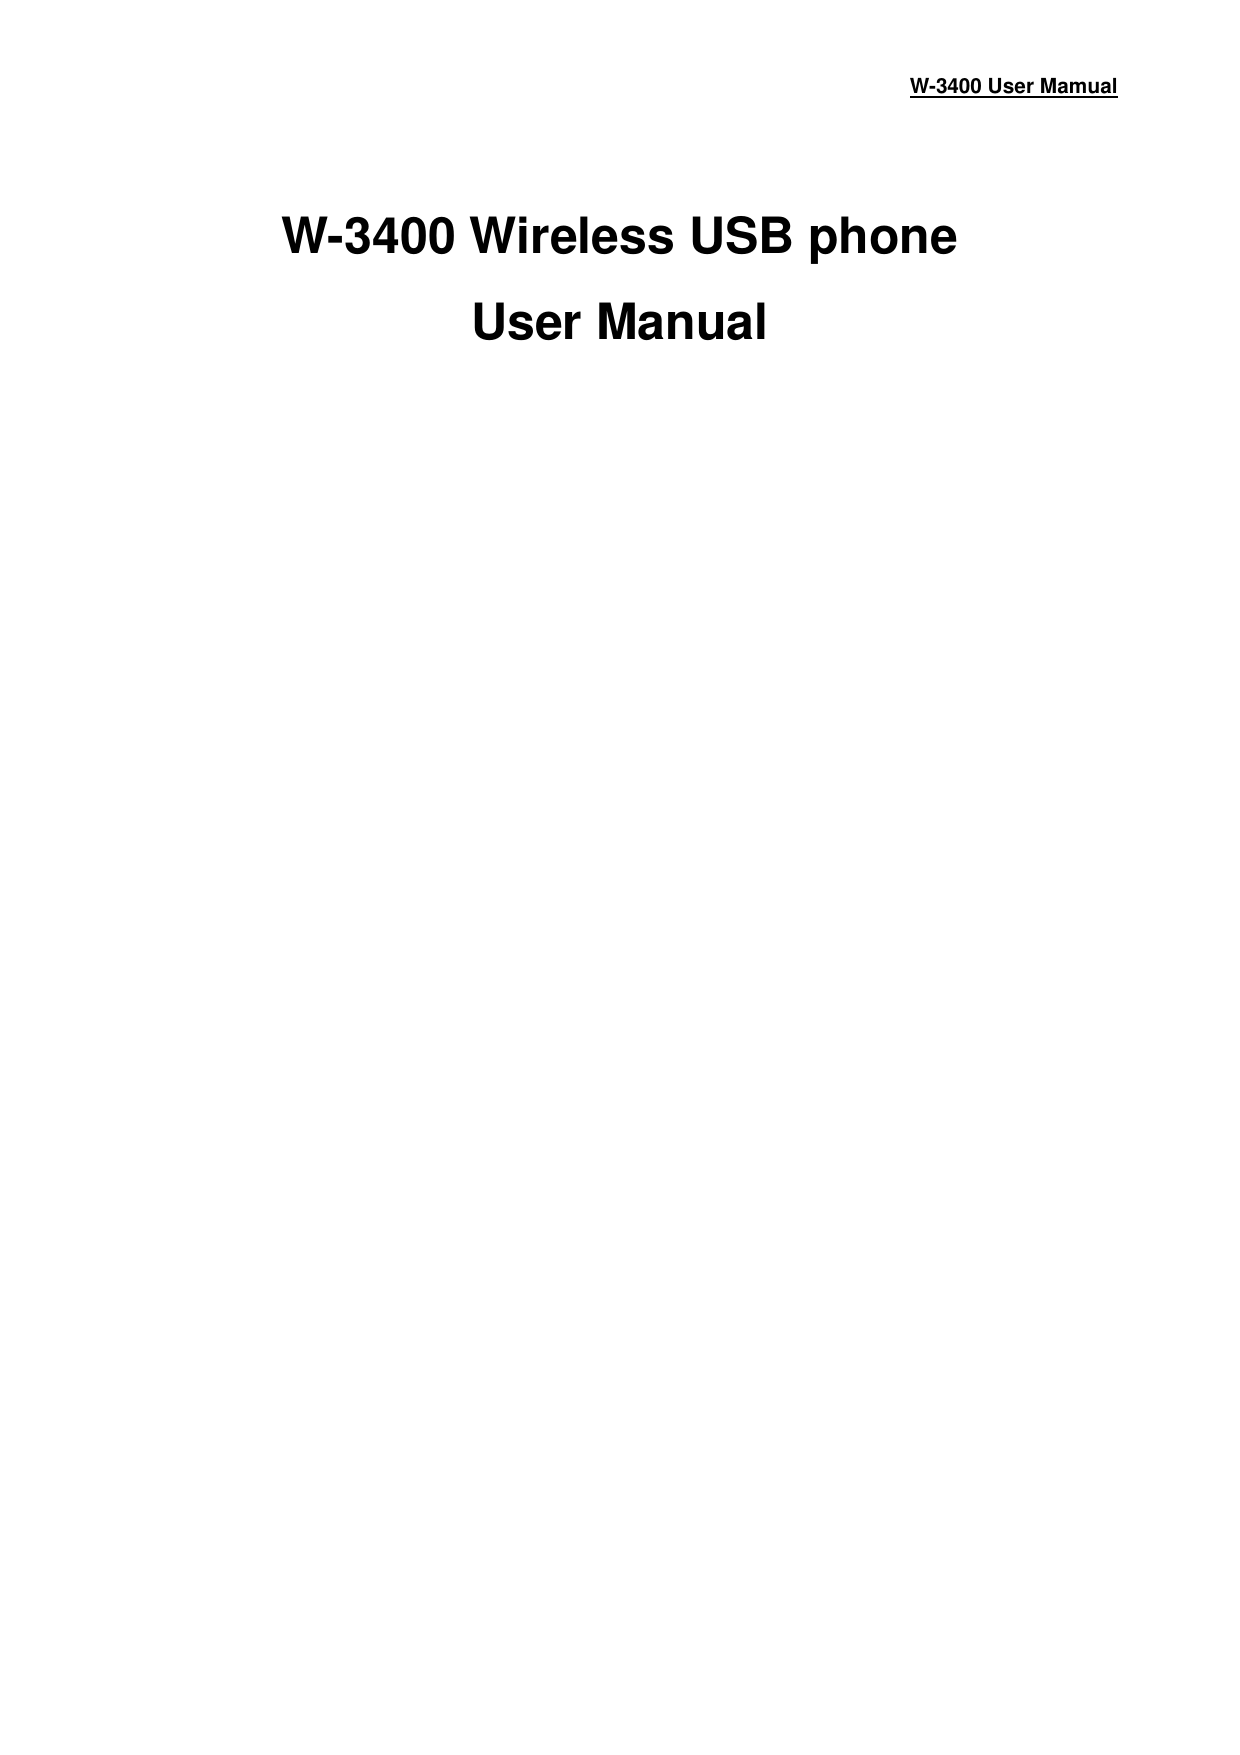 W-3400 User Mamual     W-3400 Wireless USB phone User Manual                                                                               